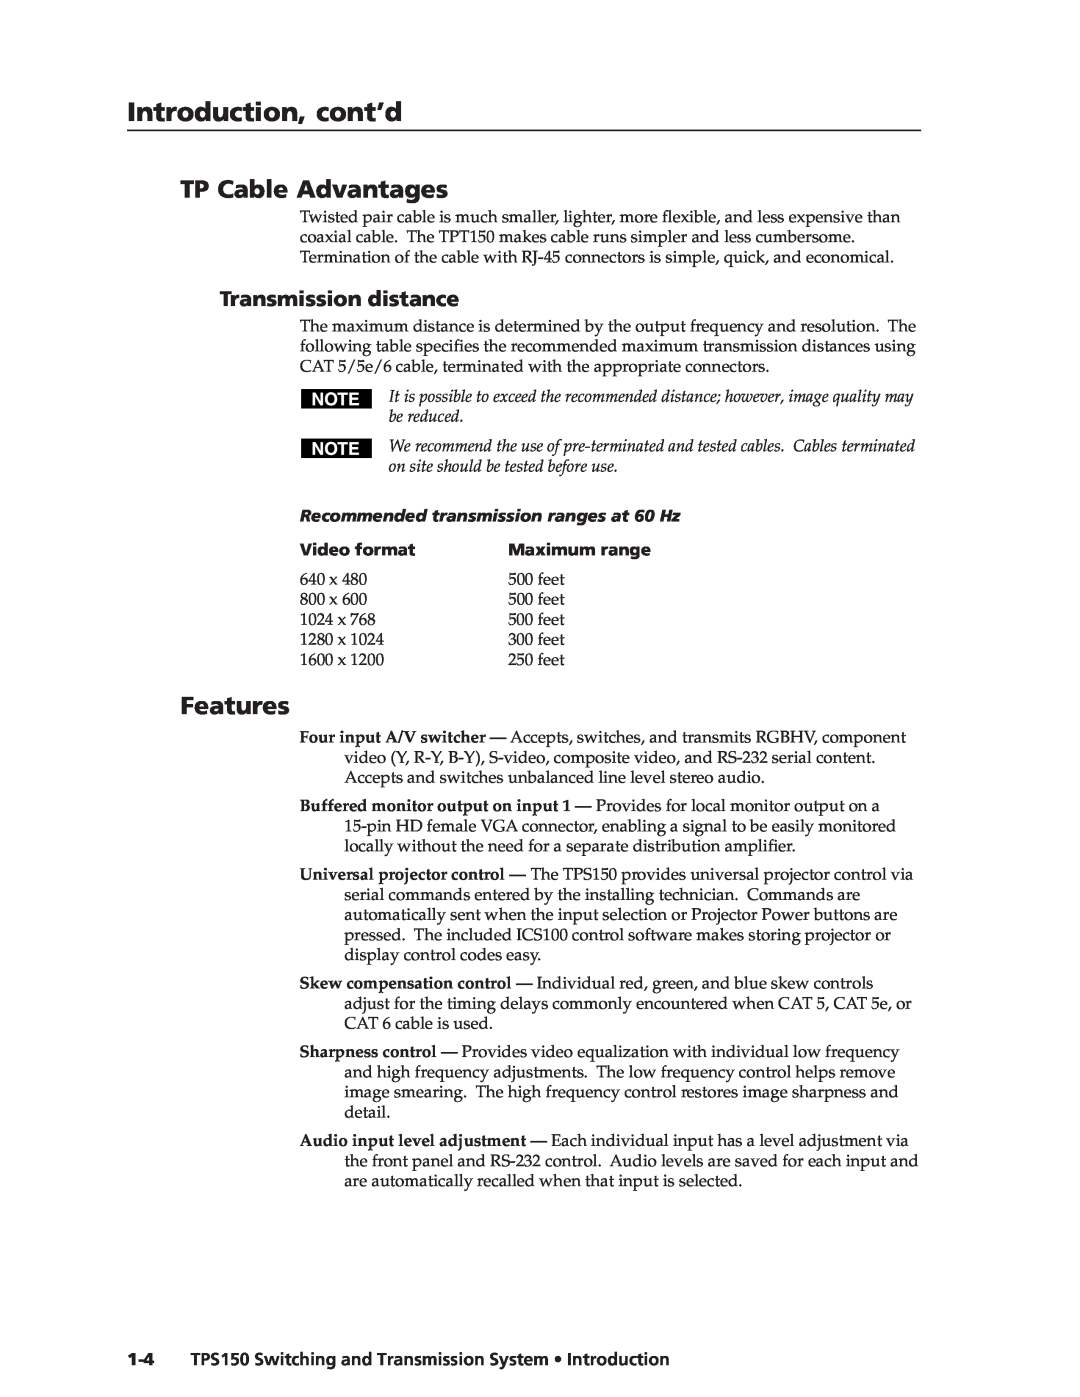 Extron electronic TPS150 manual Introduction, cont’d, TP Cable Advantages, Features, Transmission distance, Video format 